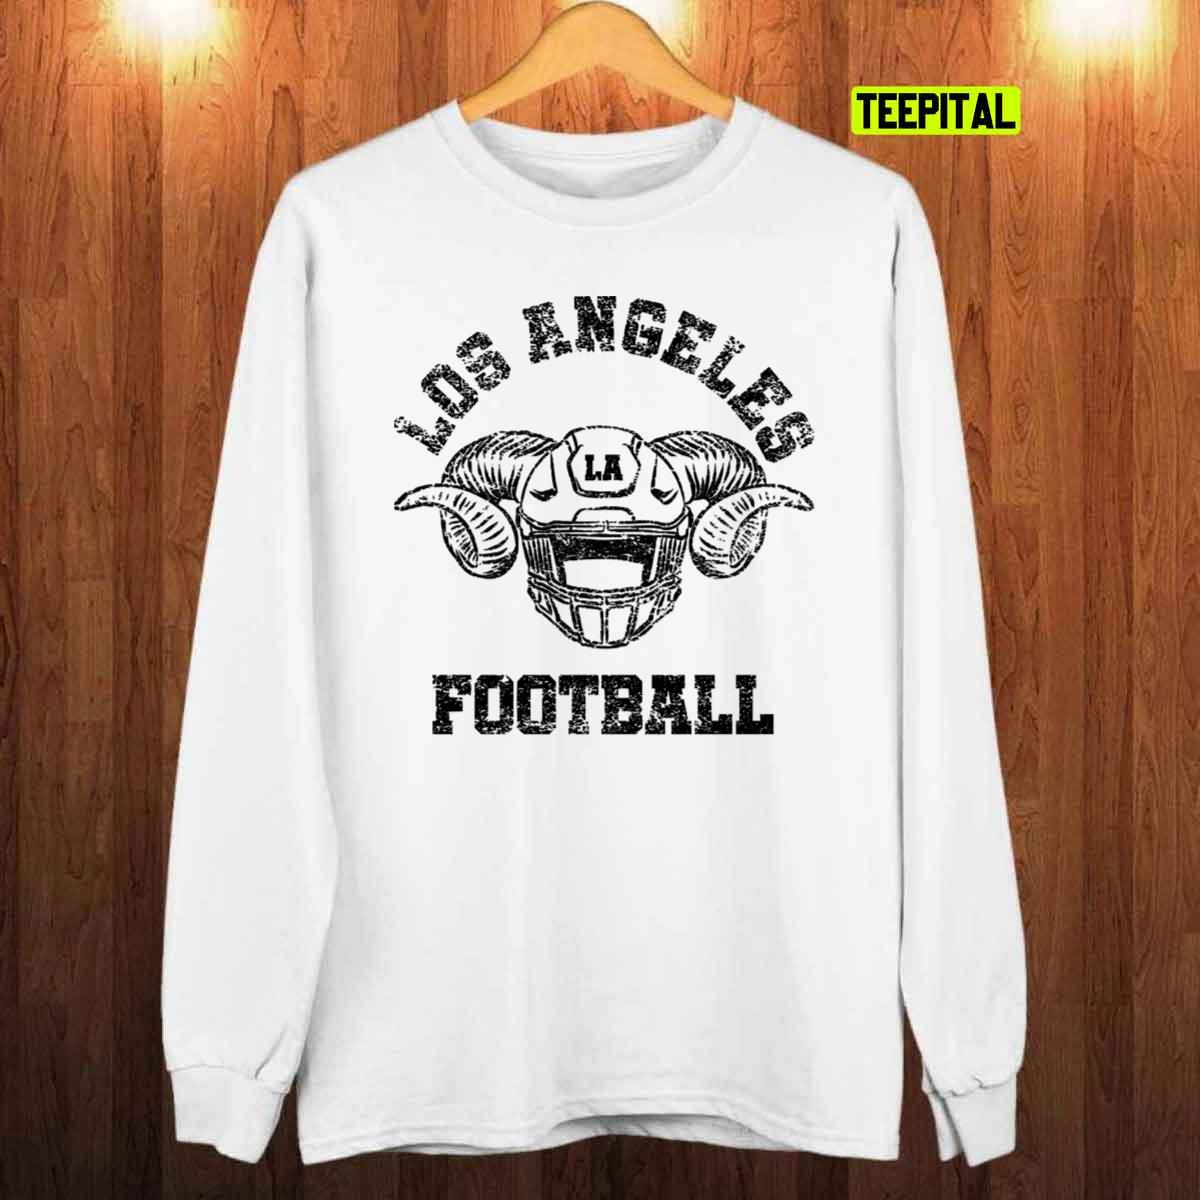 Los Angeles Rams Football T-Shirt